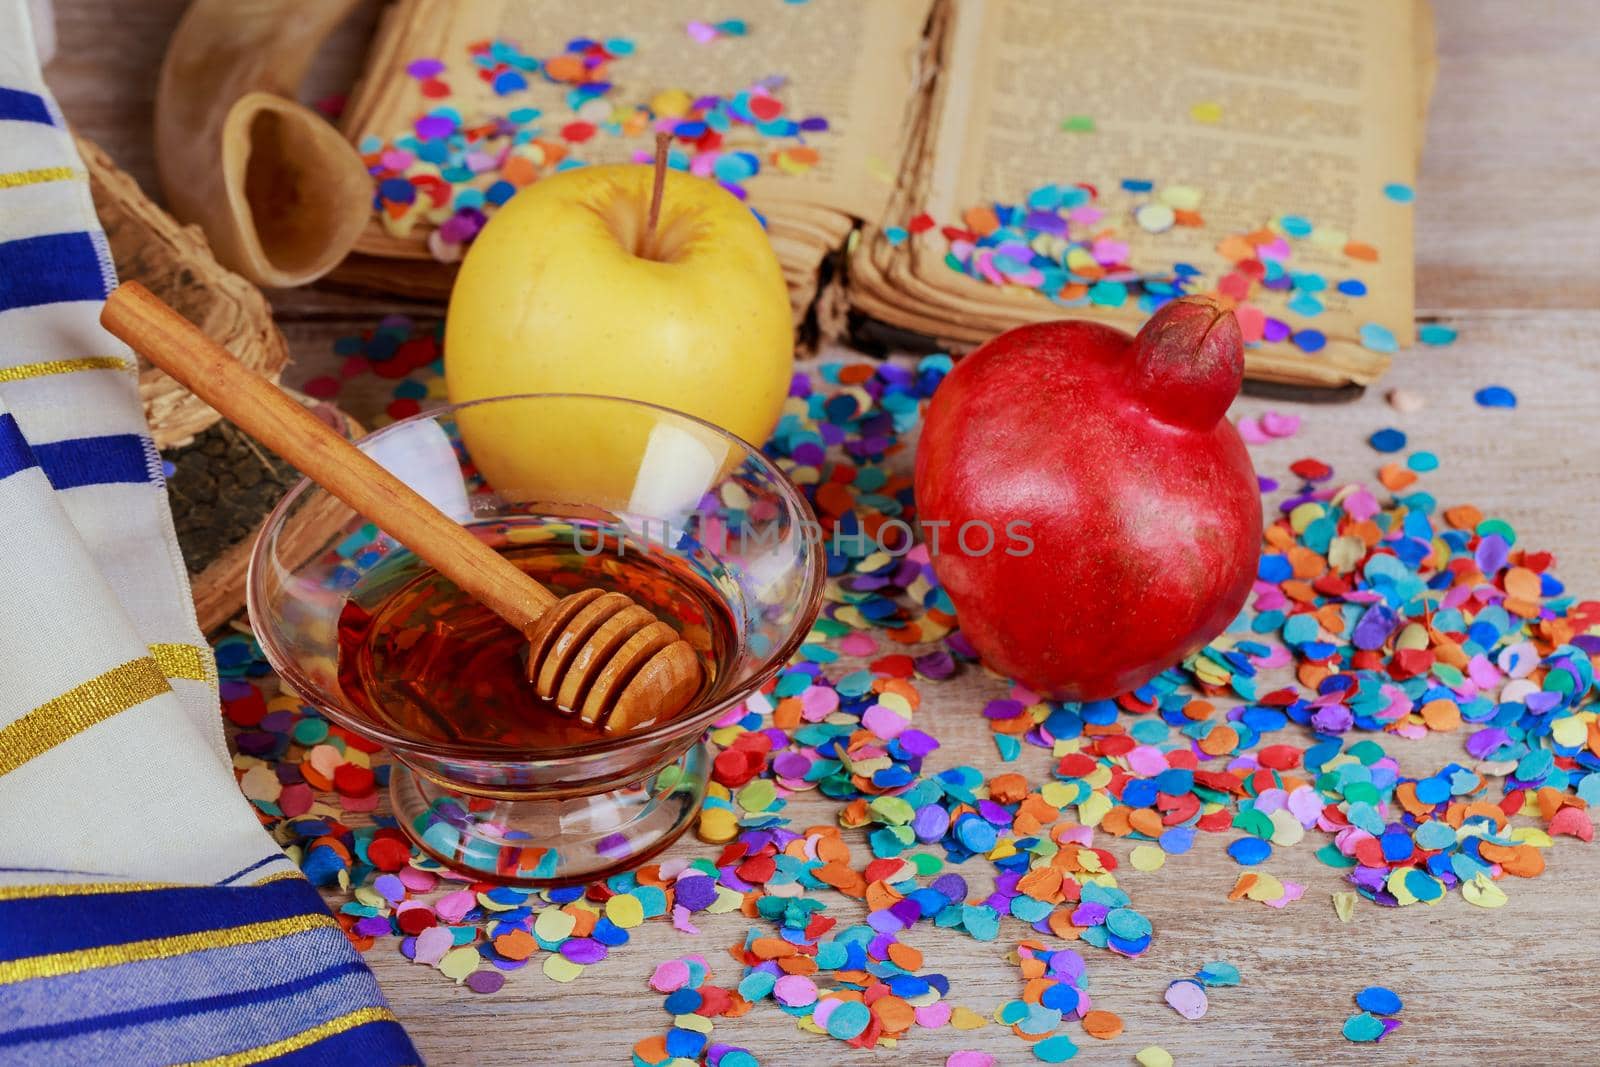 Jewish New Year Holiday Rosh Hashanah celebration by ungvar